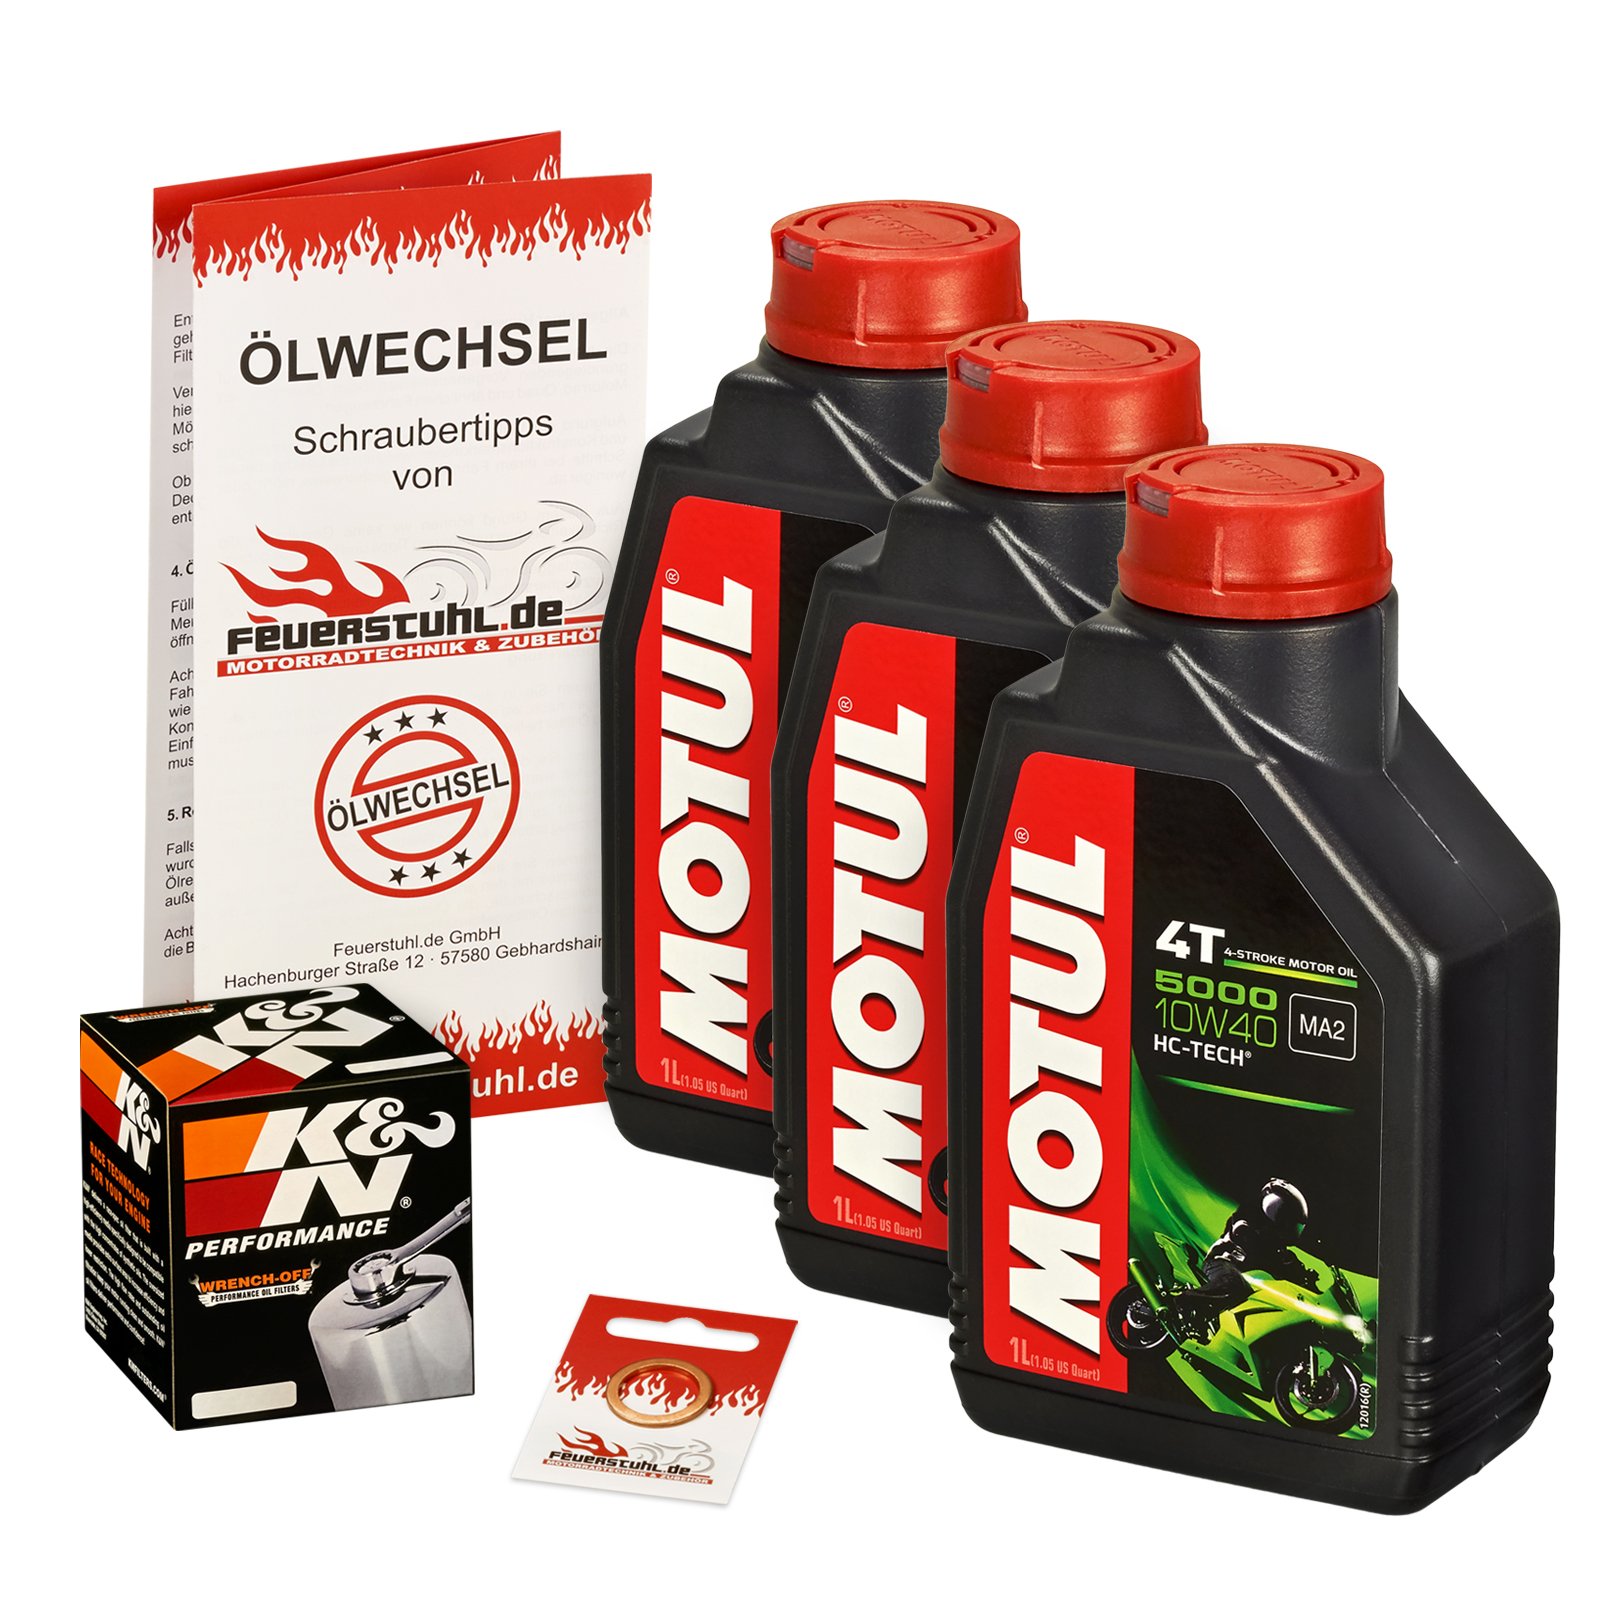 Motul 10W-40 Öl + K&N Ölfilter für Honda VT 600 C Shadow, 88-00, PC21 - Ölwechselset inkl. Motoröl, Chrom Filter, Dichtring von Feuerstuhl.de GmbH